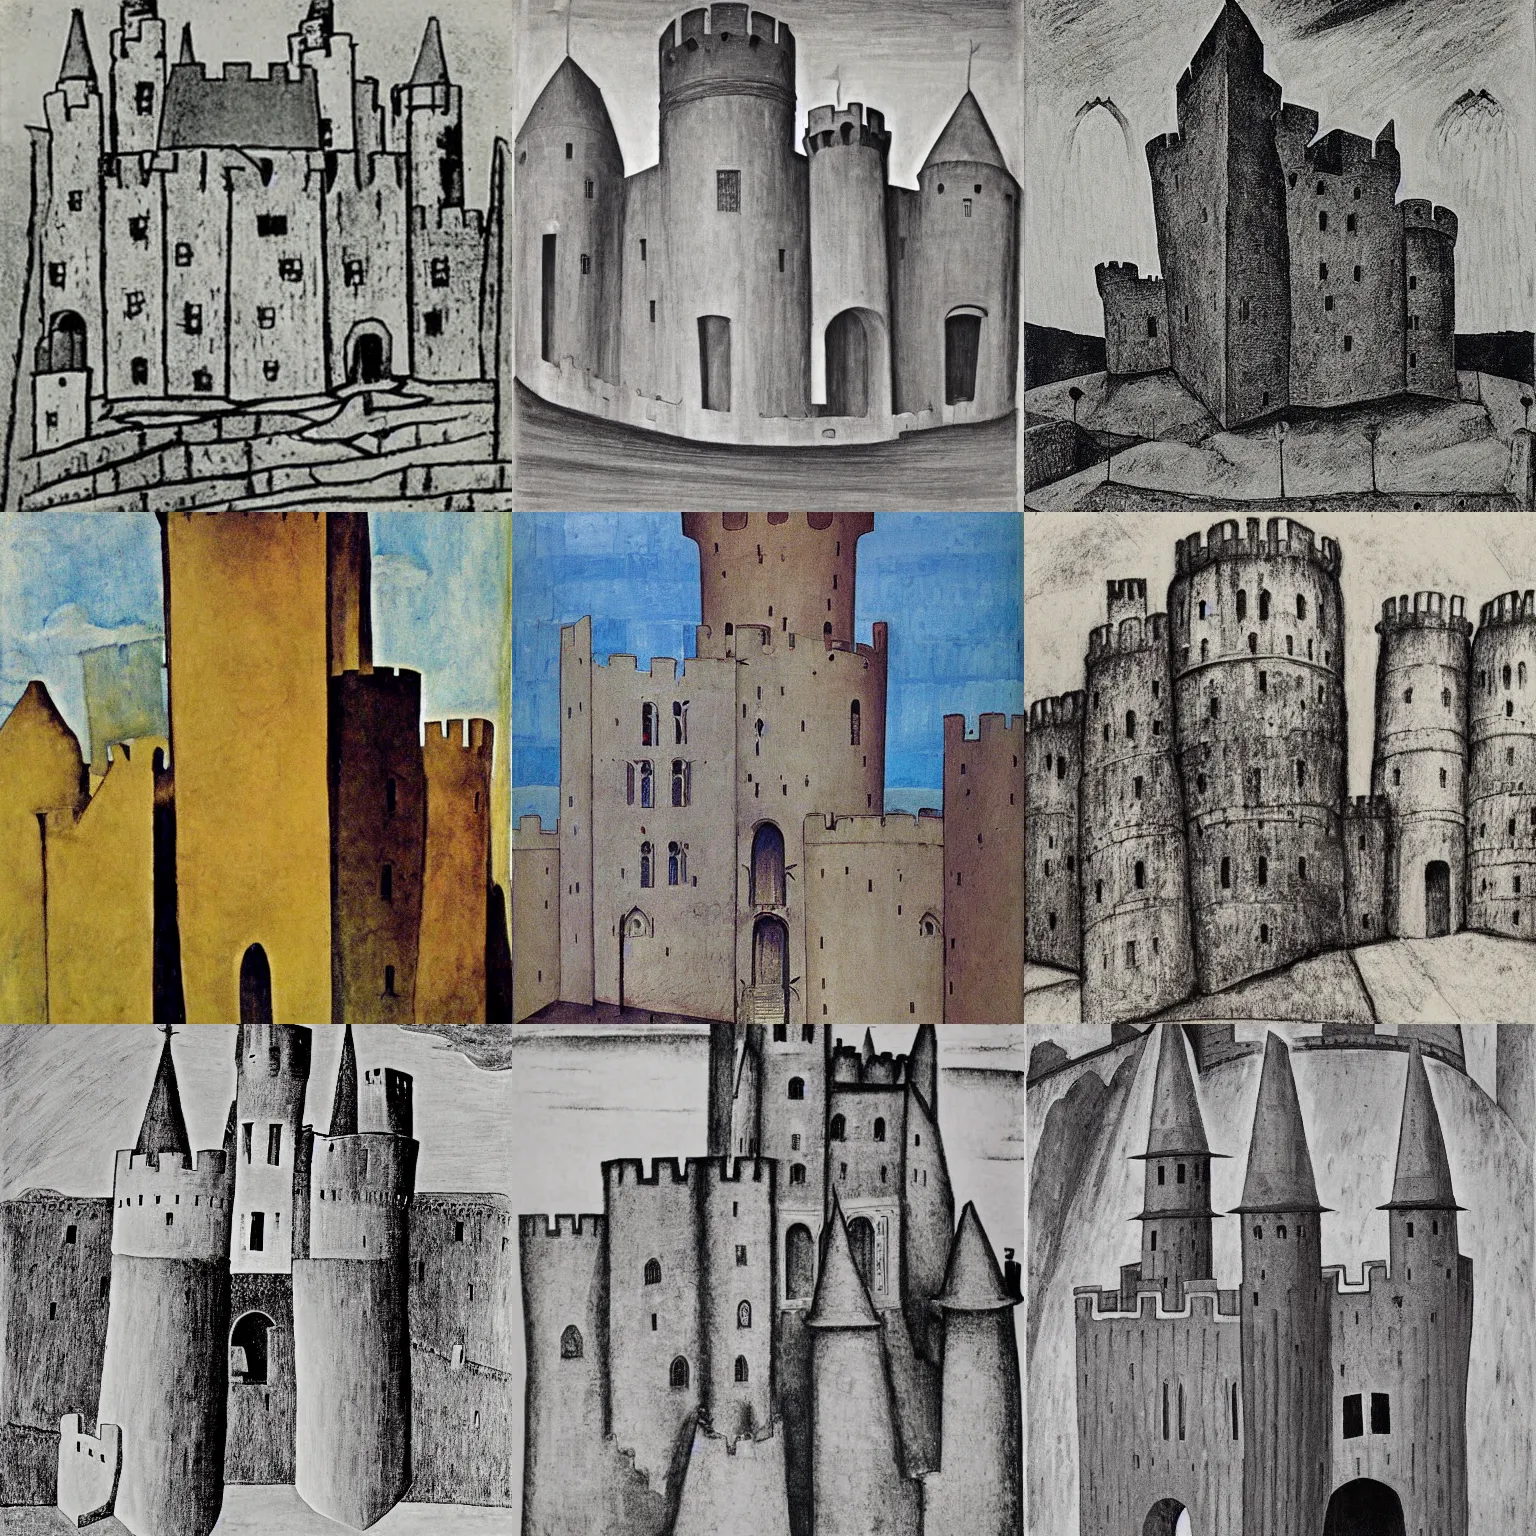 Prompt: medieval castle, by ben shahn